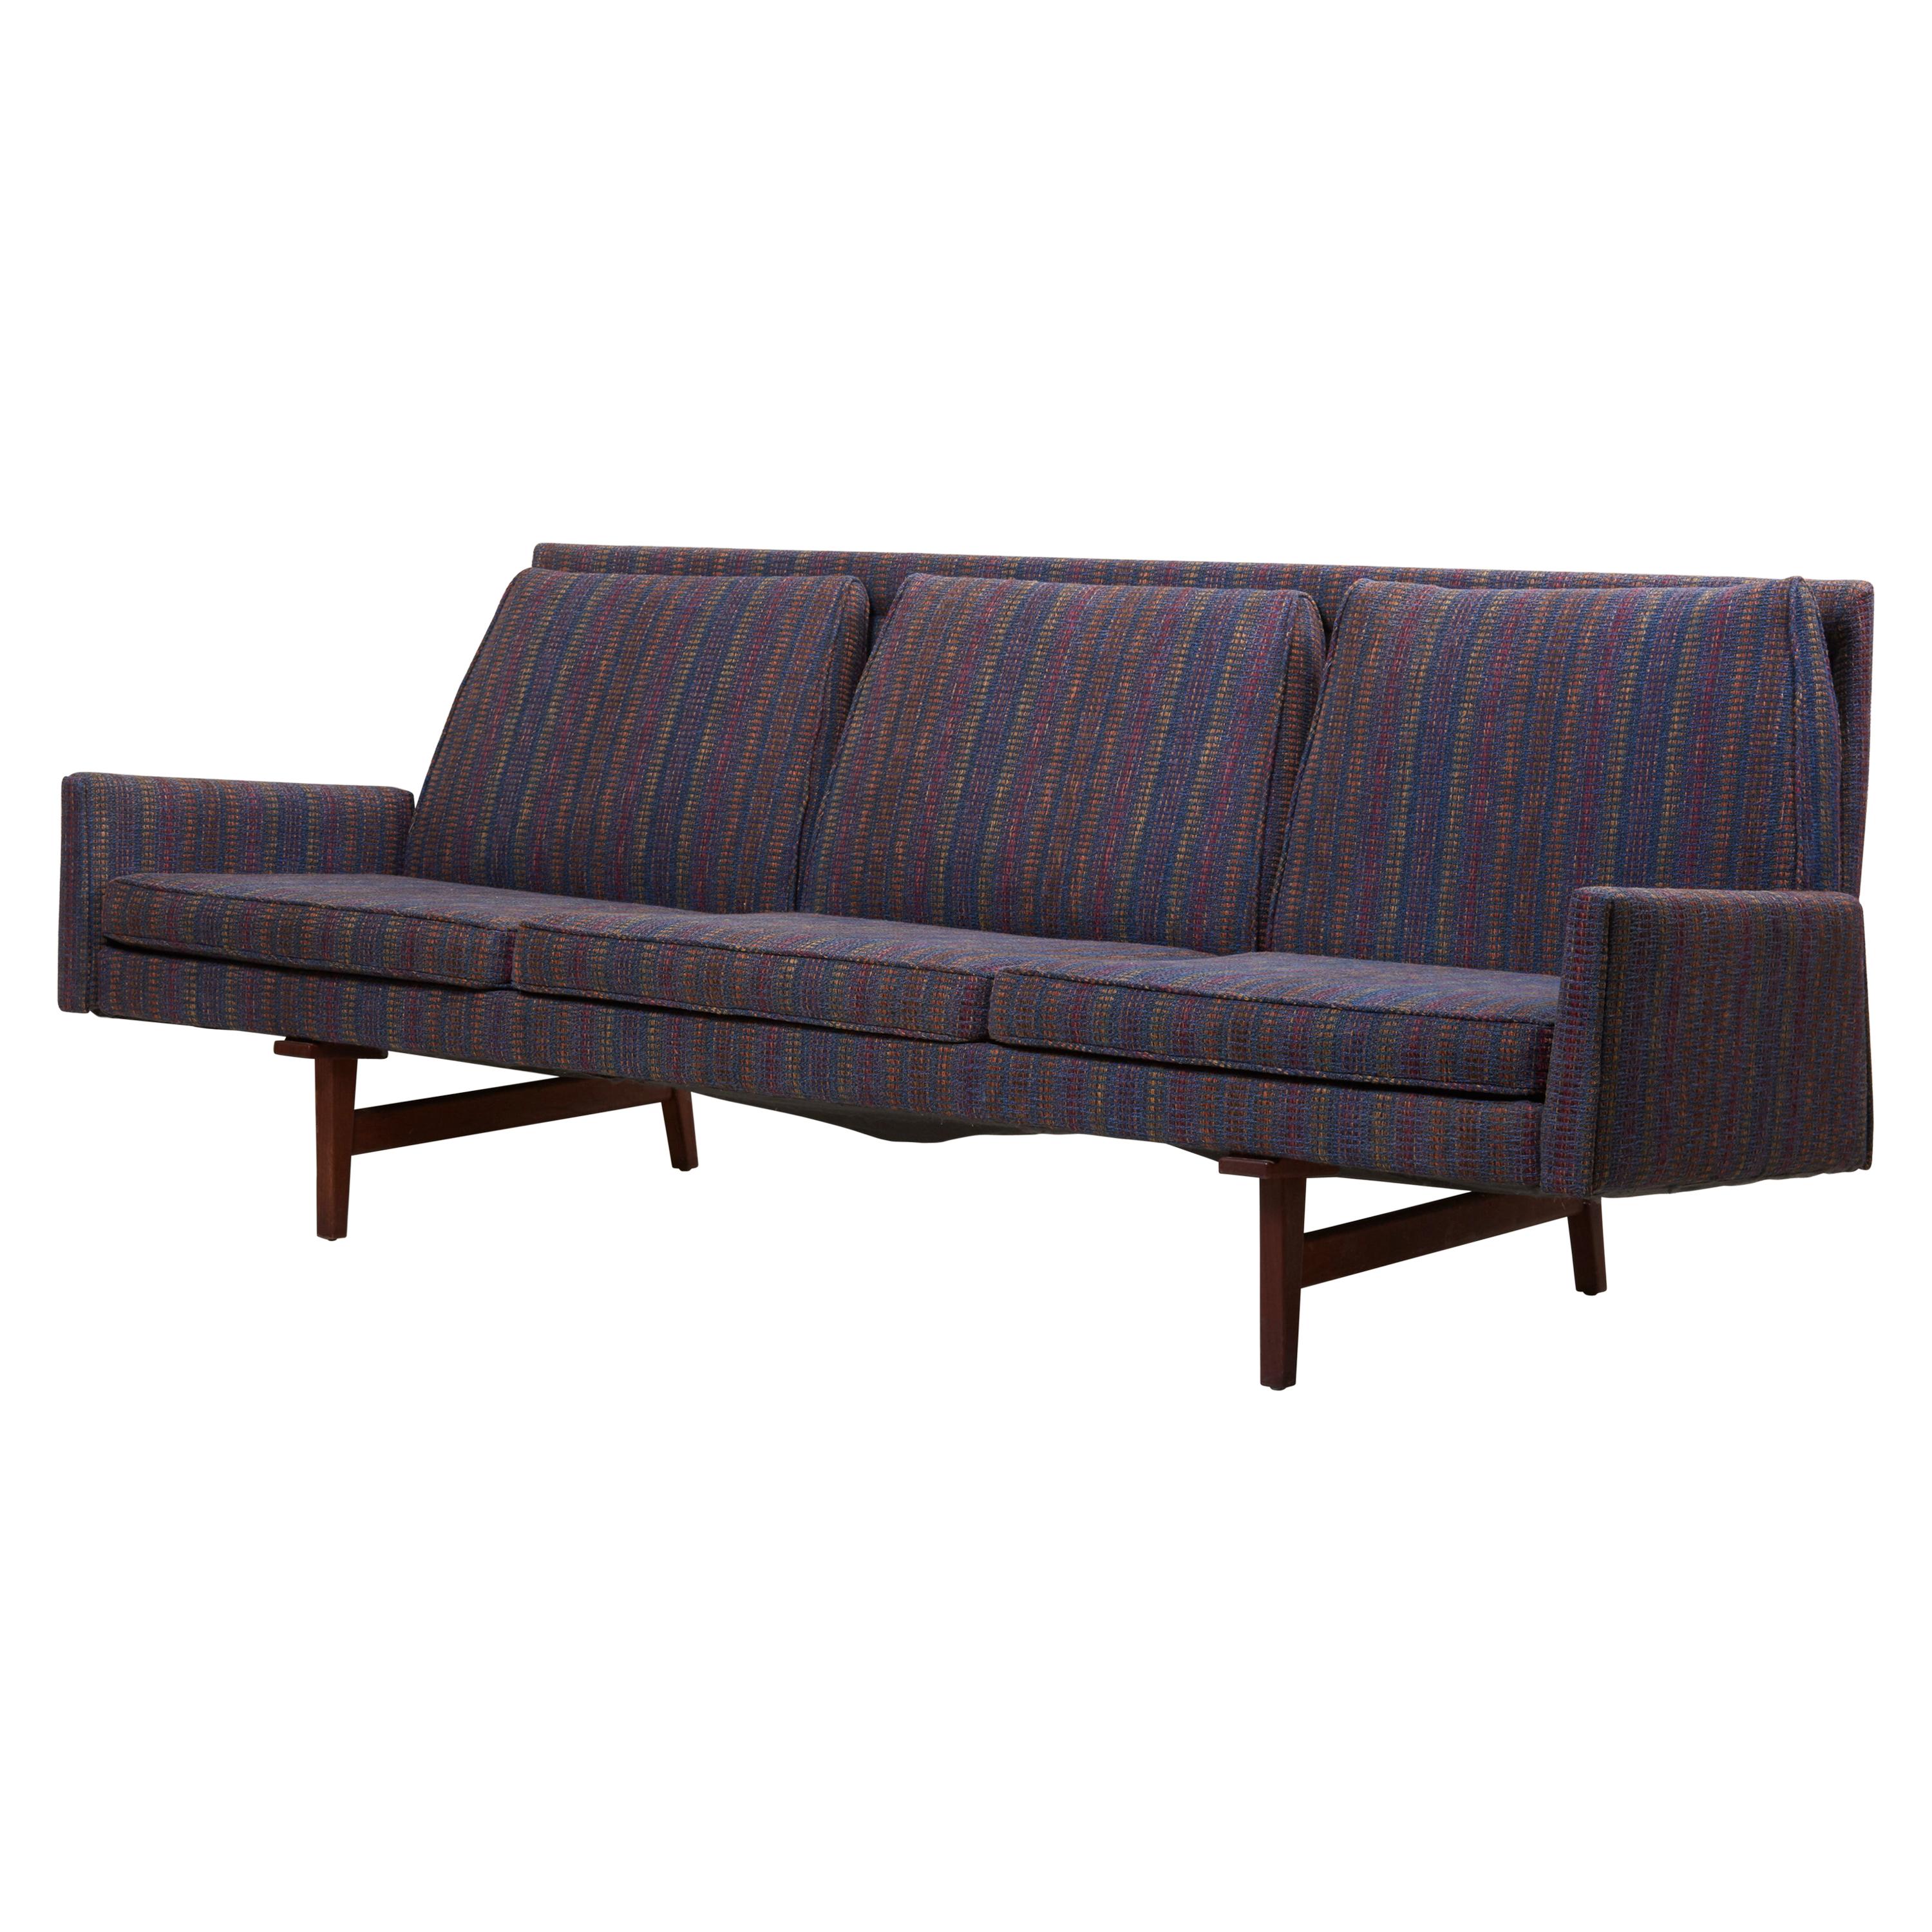 Three-Seat Jens Risom Sofa for Risom Design Inc in Good Condition